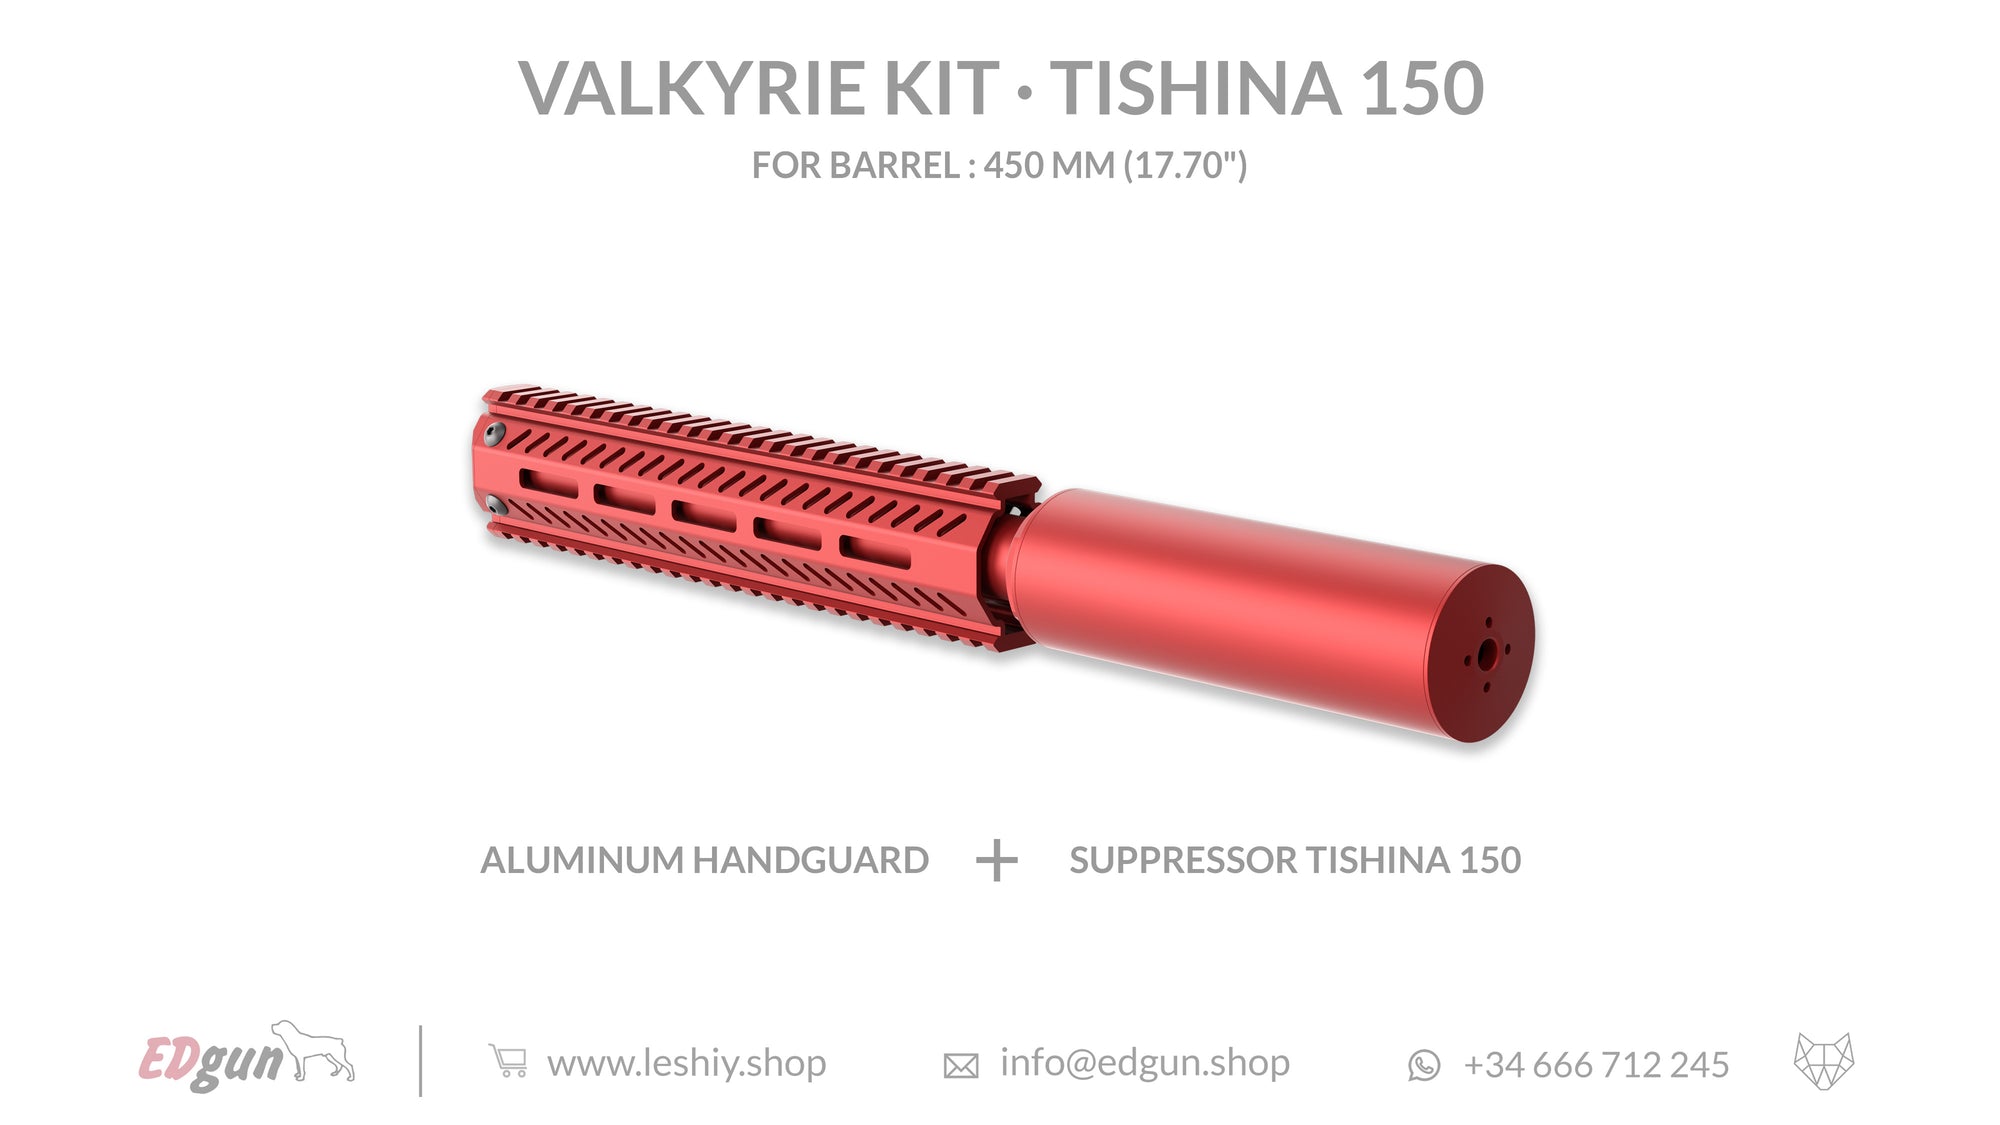 Valkyrie Kit Tishina 150 for barrel 450mm (17.70¨)